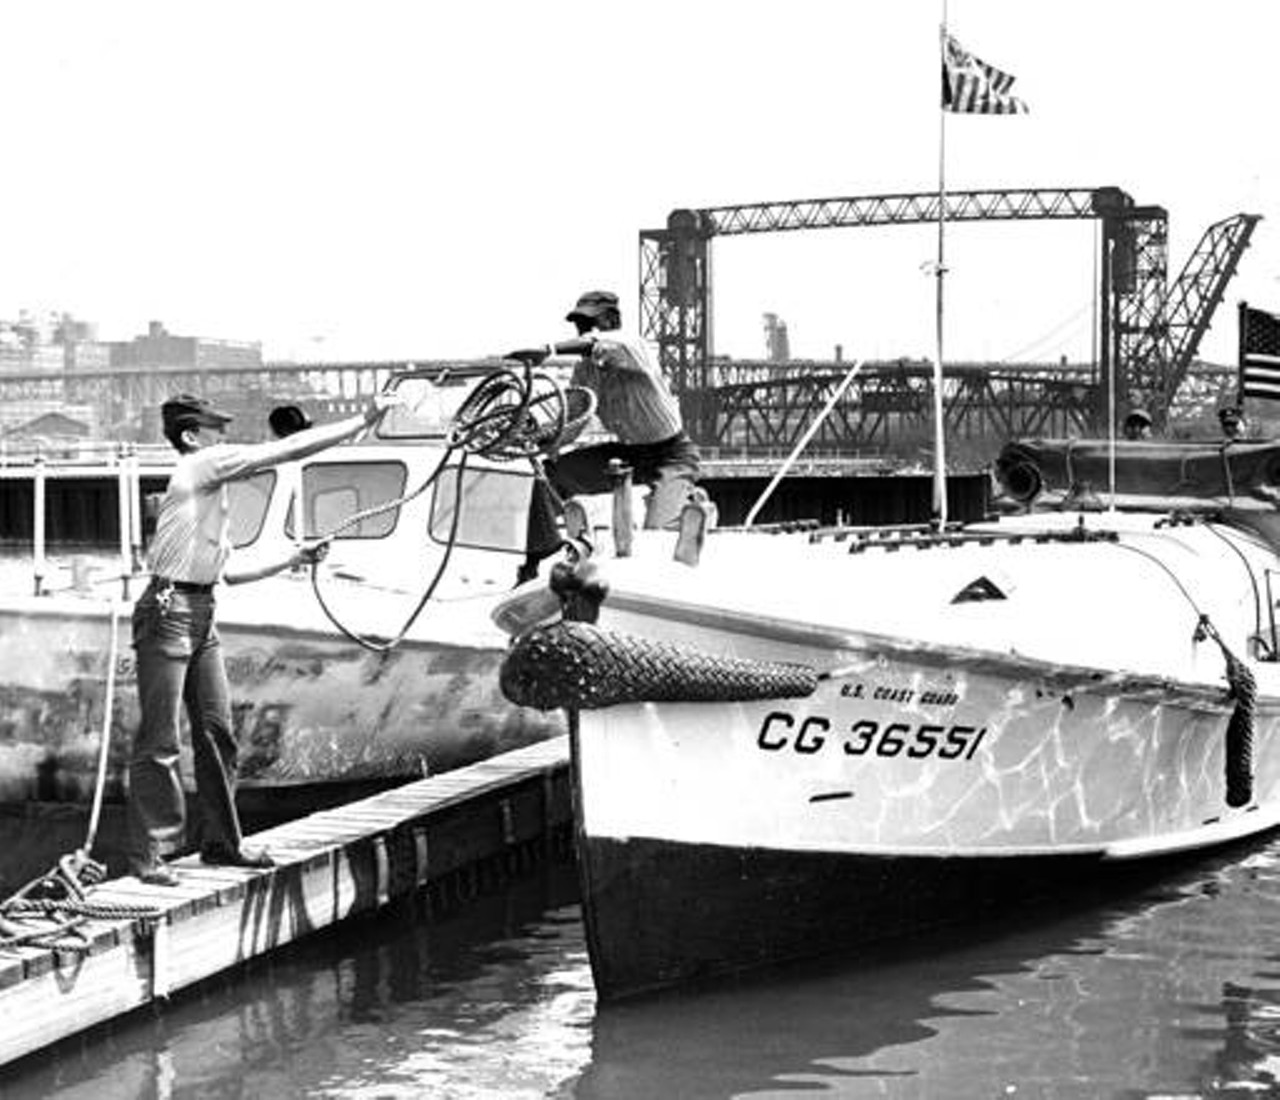 U.S. Coast Guard boat in the Flats, 1967